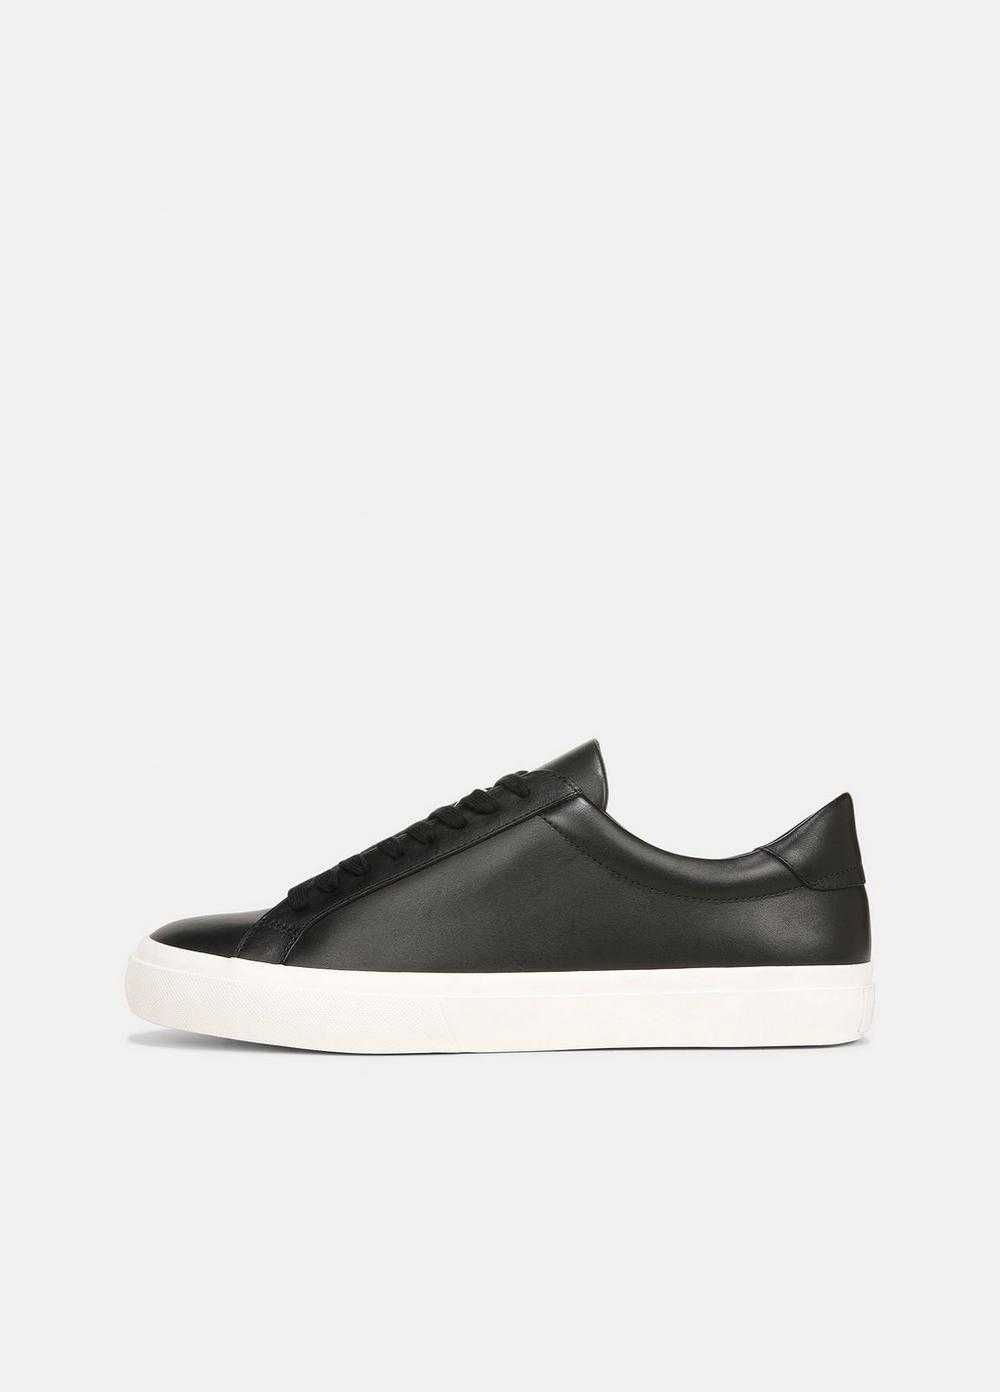 Fulton Leather Sneaker, Black, Size 7.5 Vince